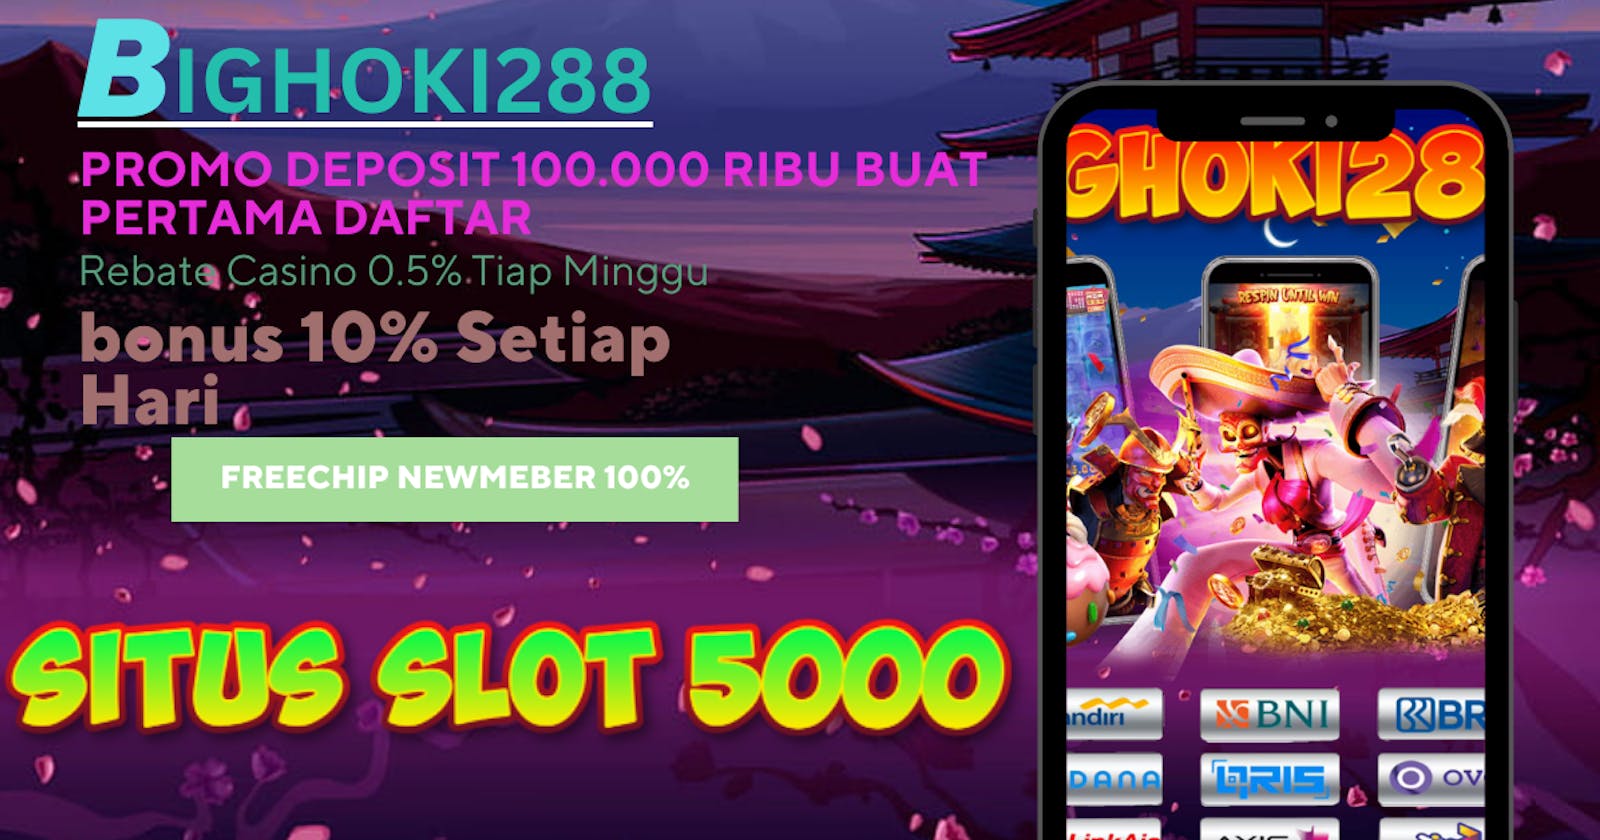 Slot 5000 : Situs Slot Gacor Minimal Deposit 5rb atau 5k